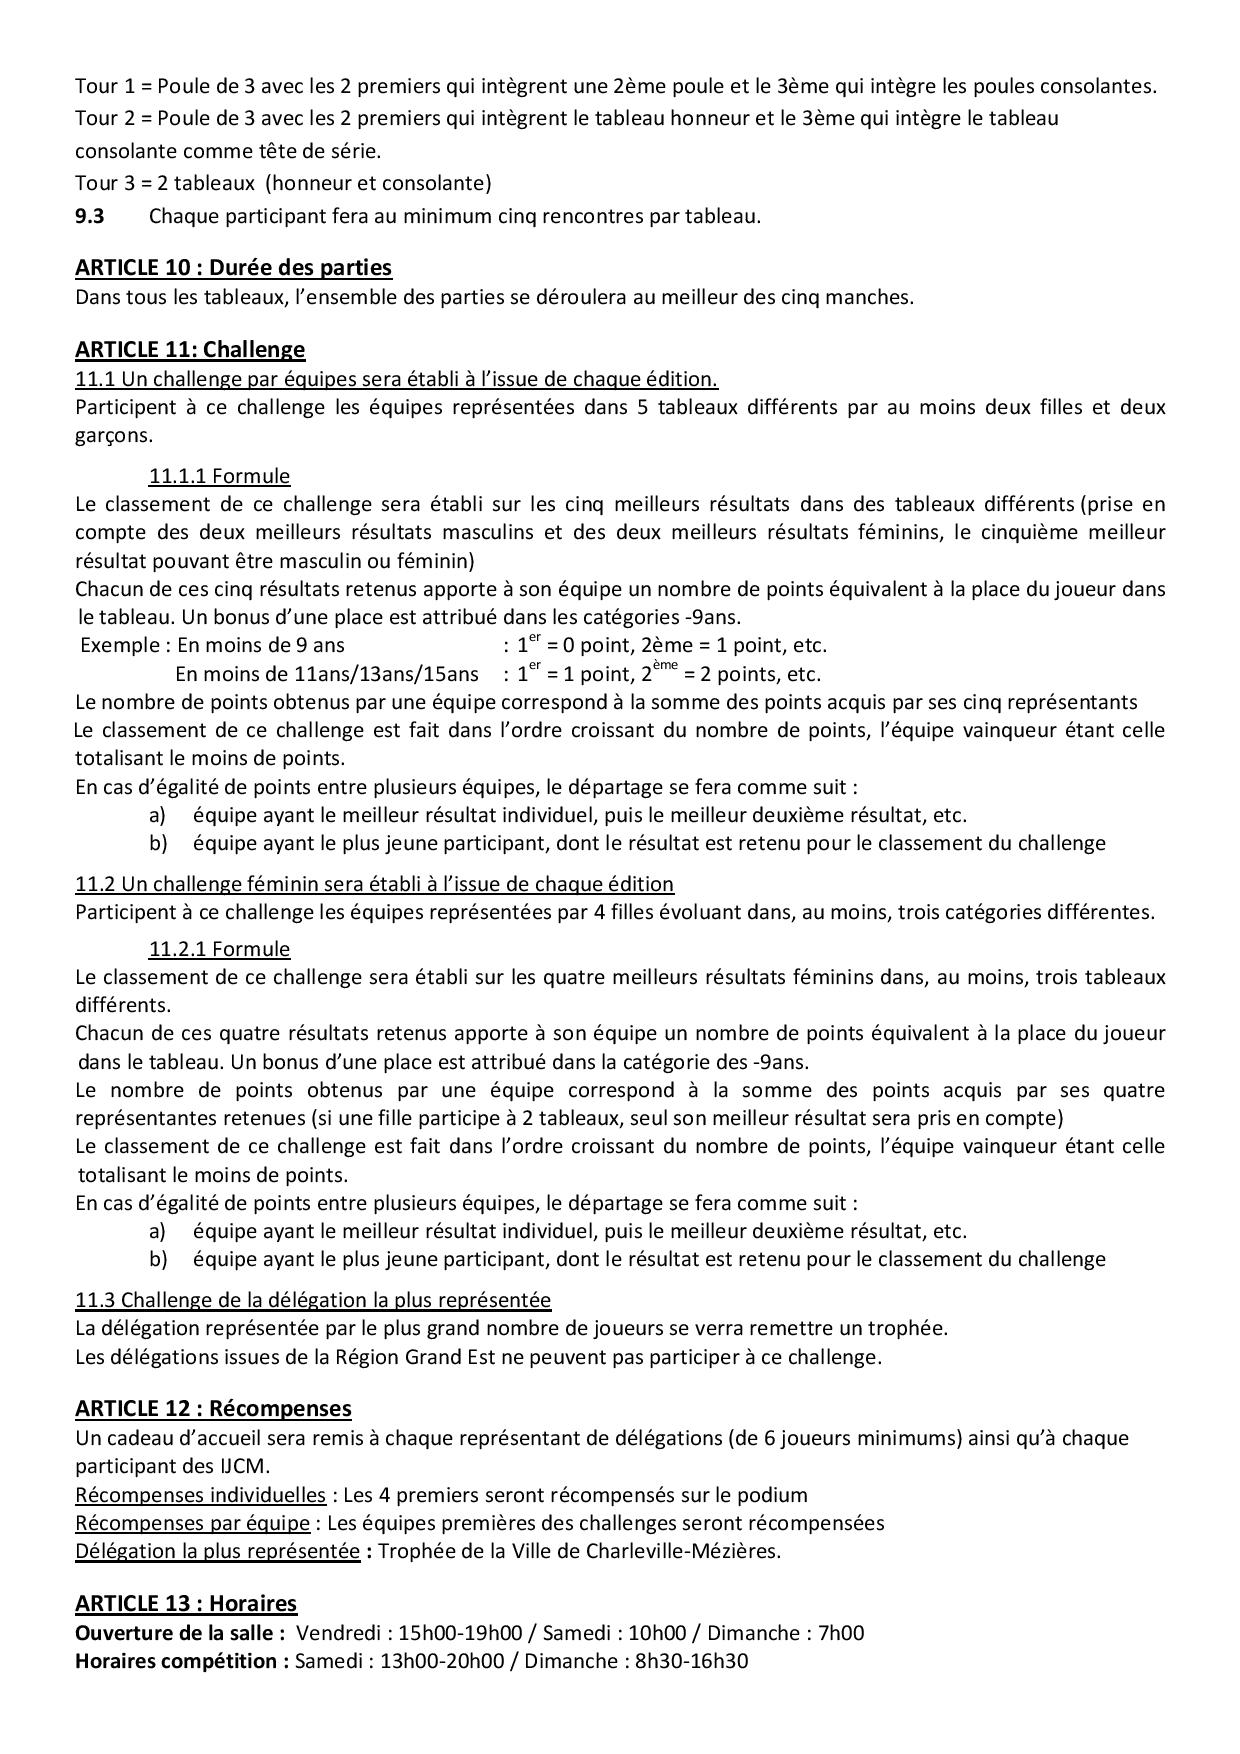 Règlement  IJCM 2020-page-002.jpg